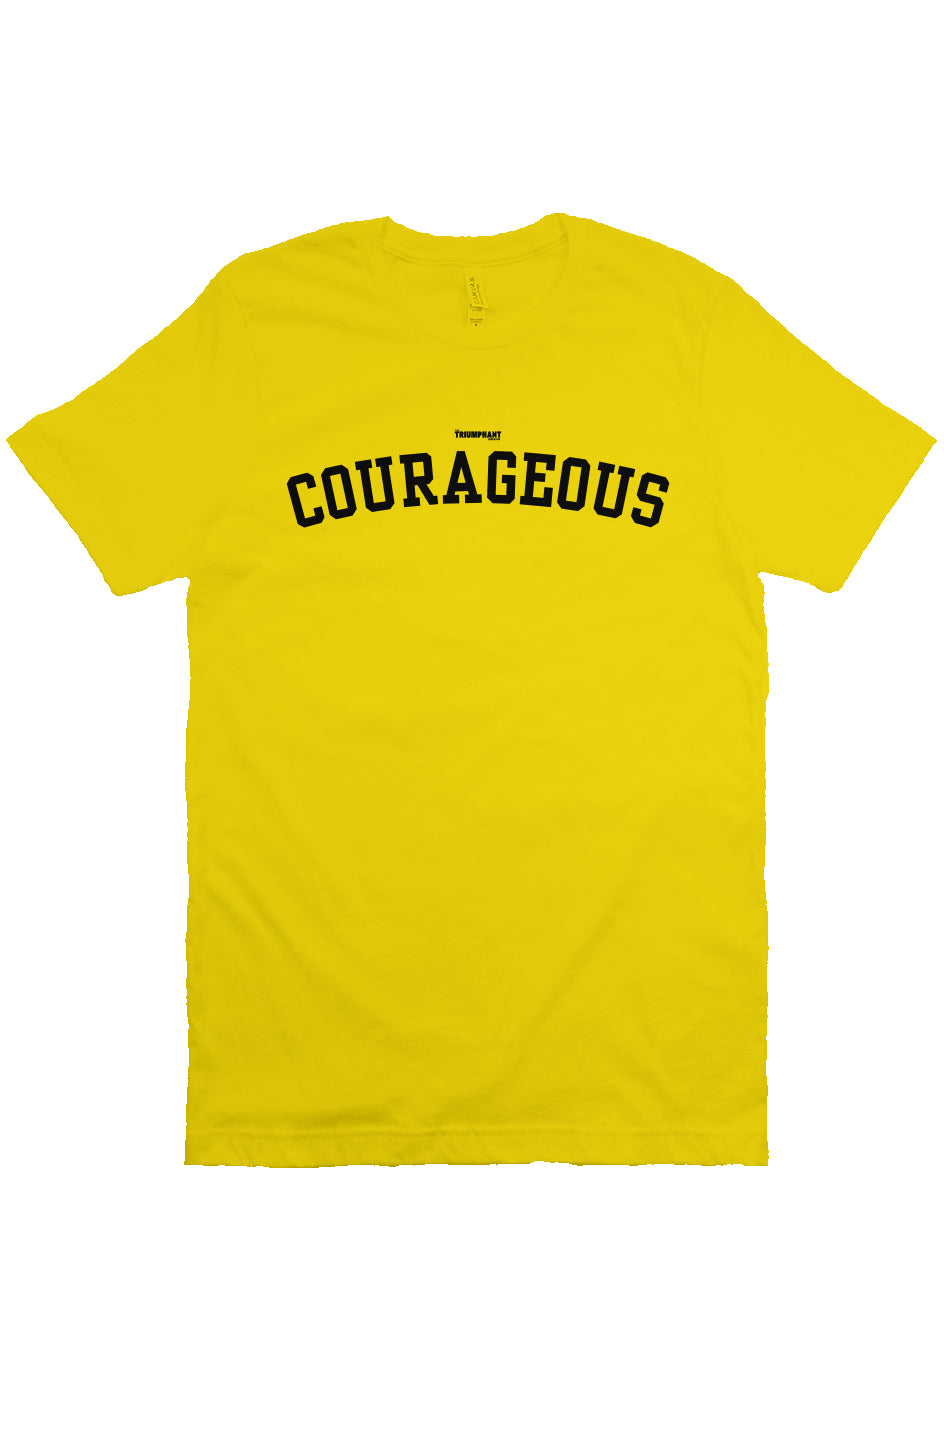 Courageous | A&D Tee